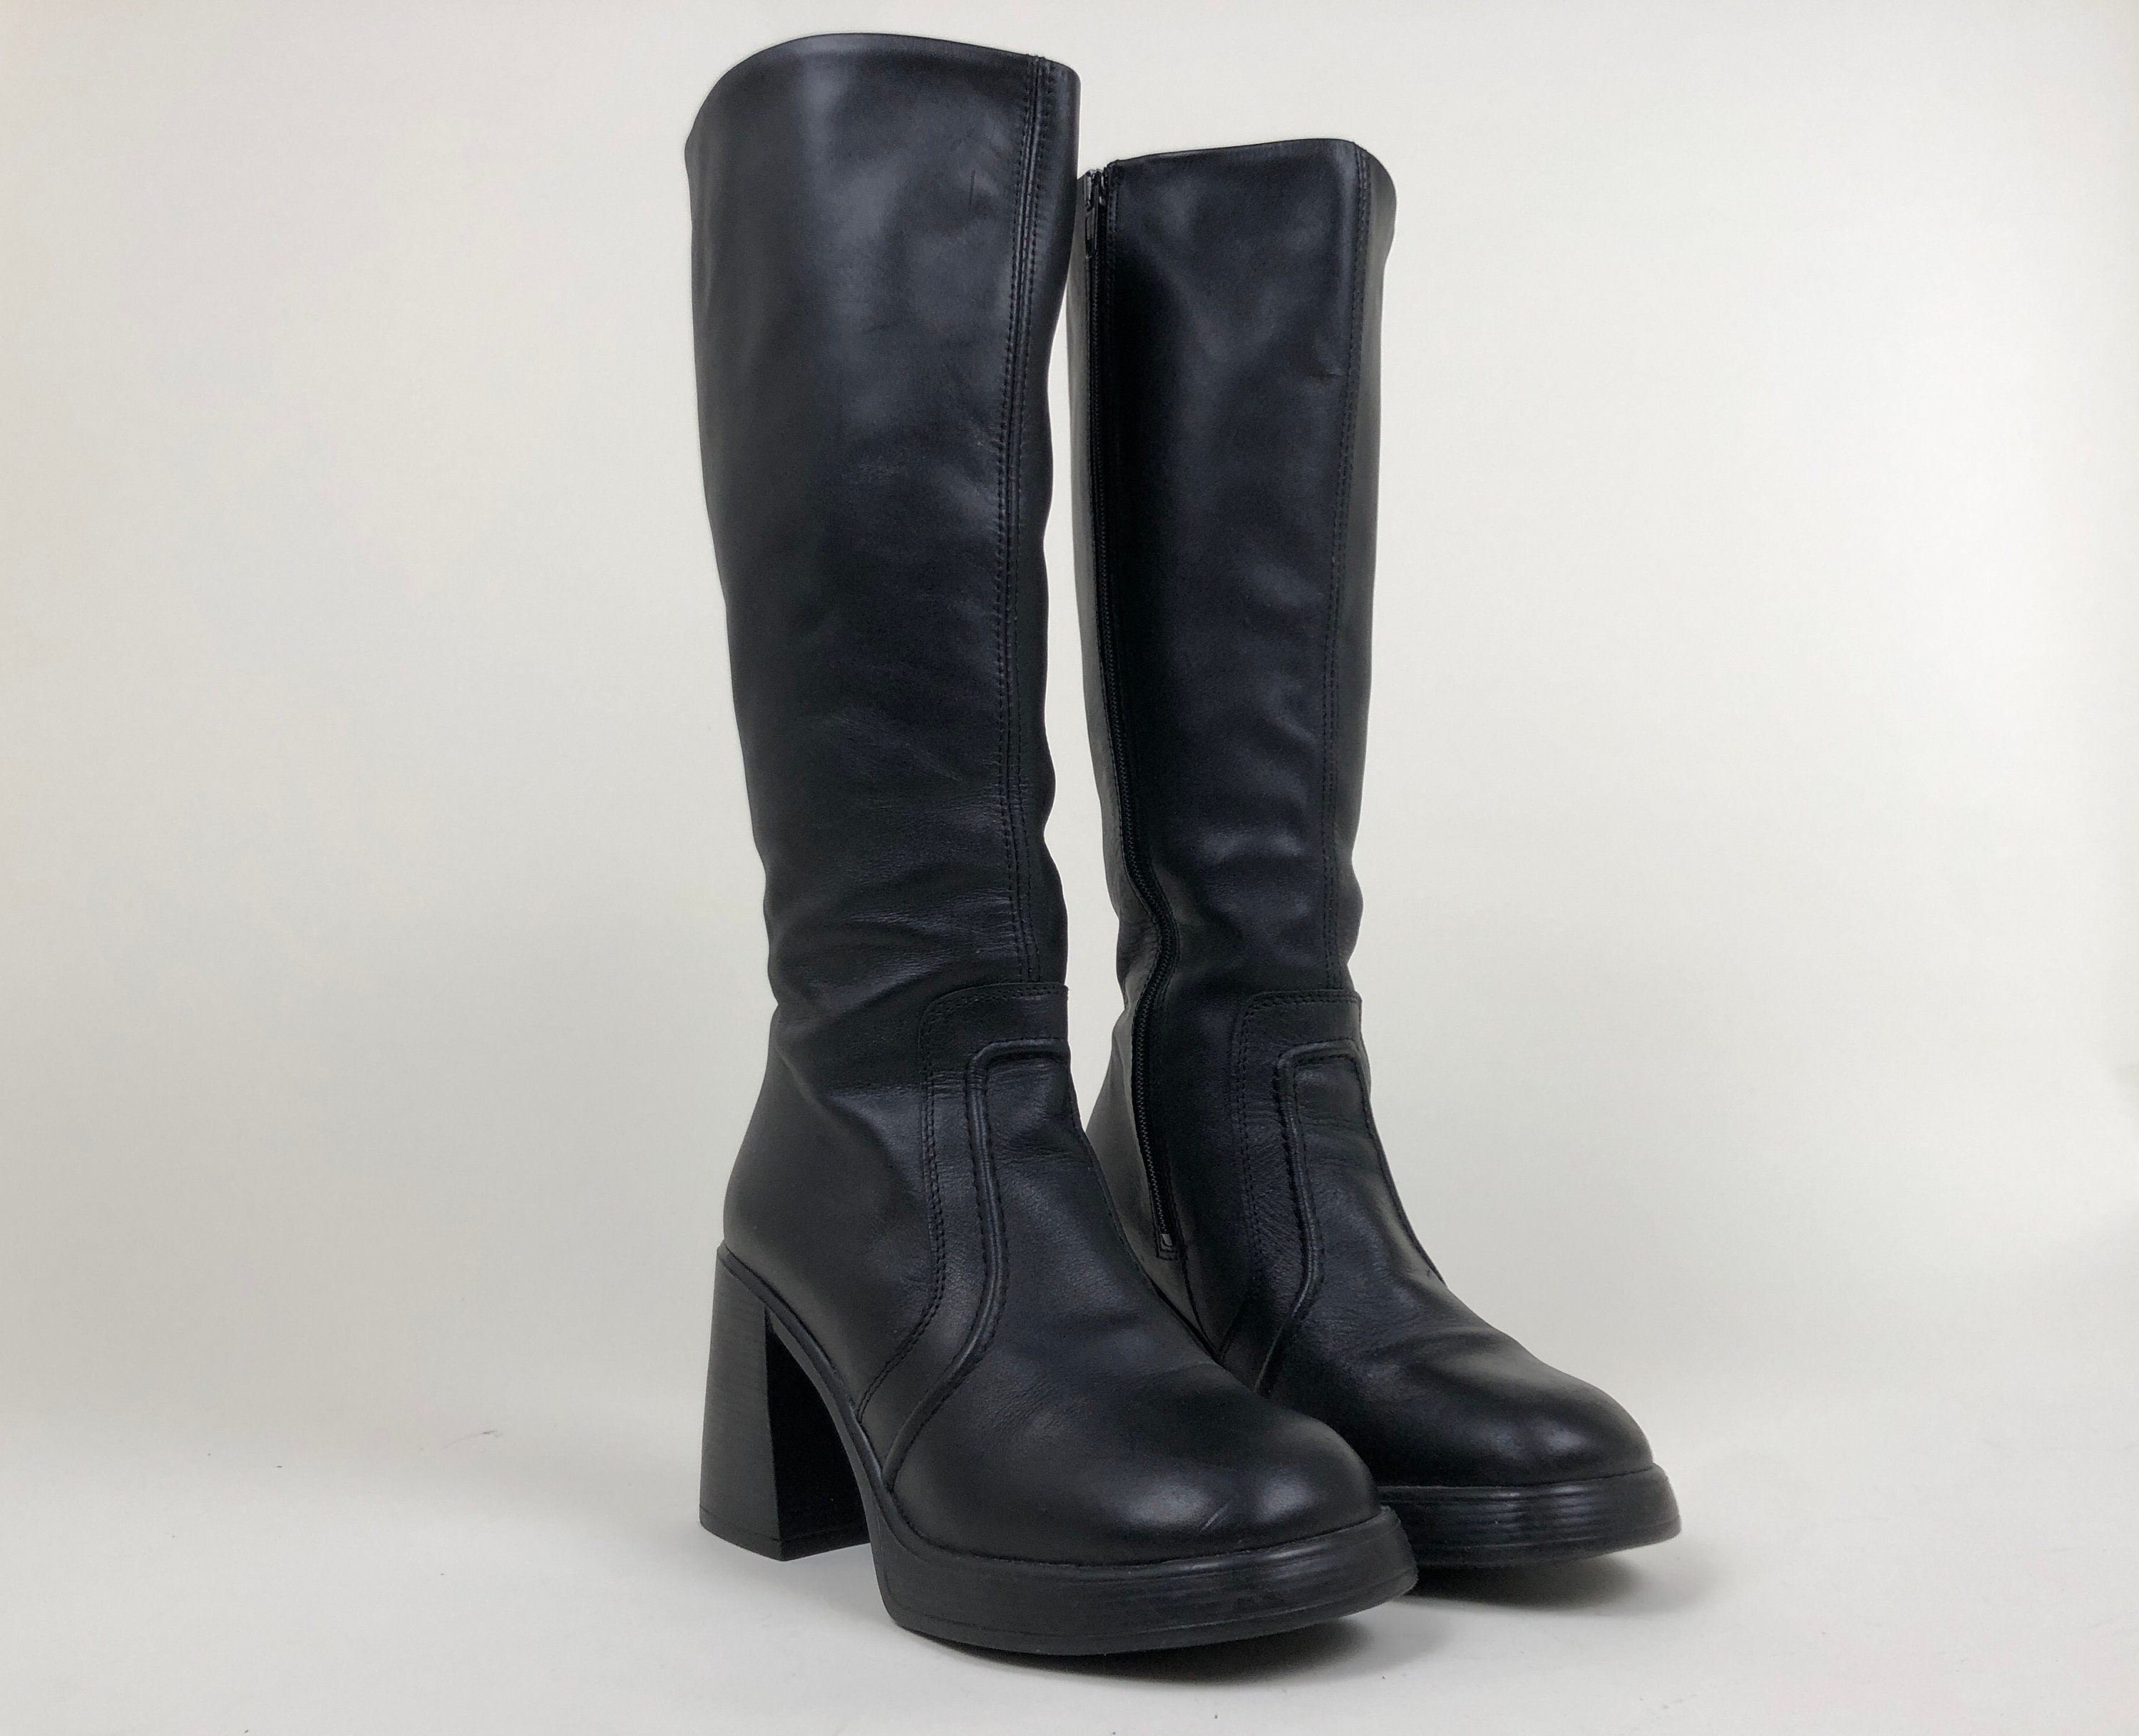 Vintage 90s ITALIAN black leather platform knee high boots / | Etsy